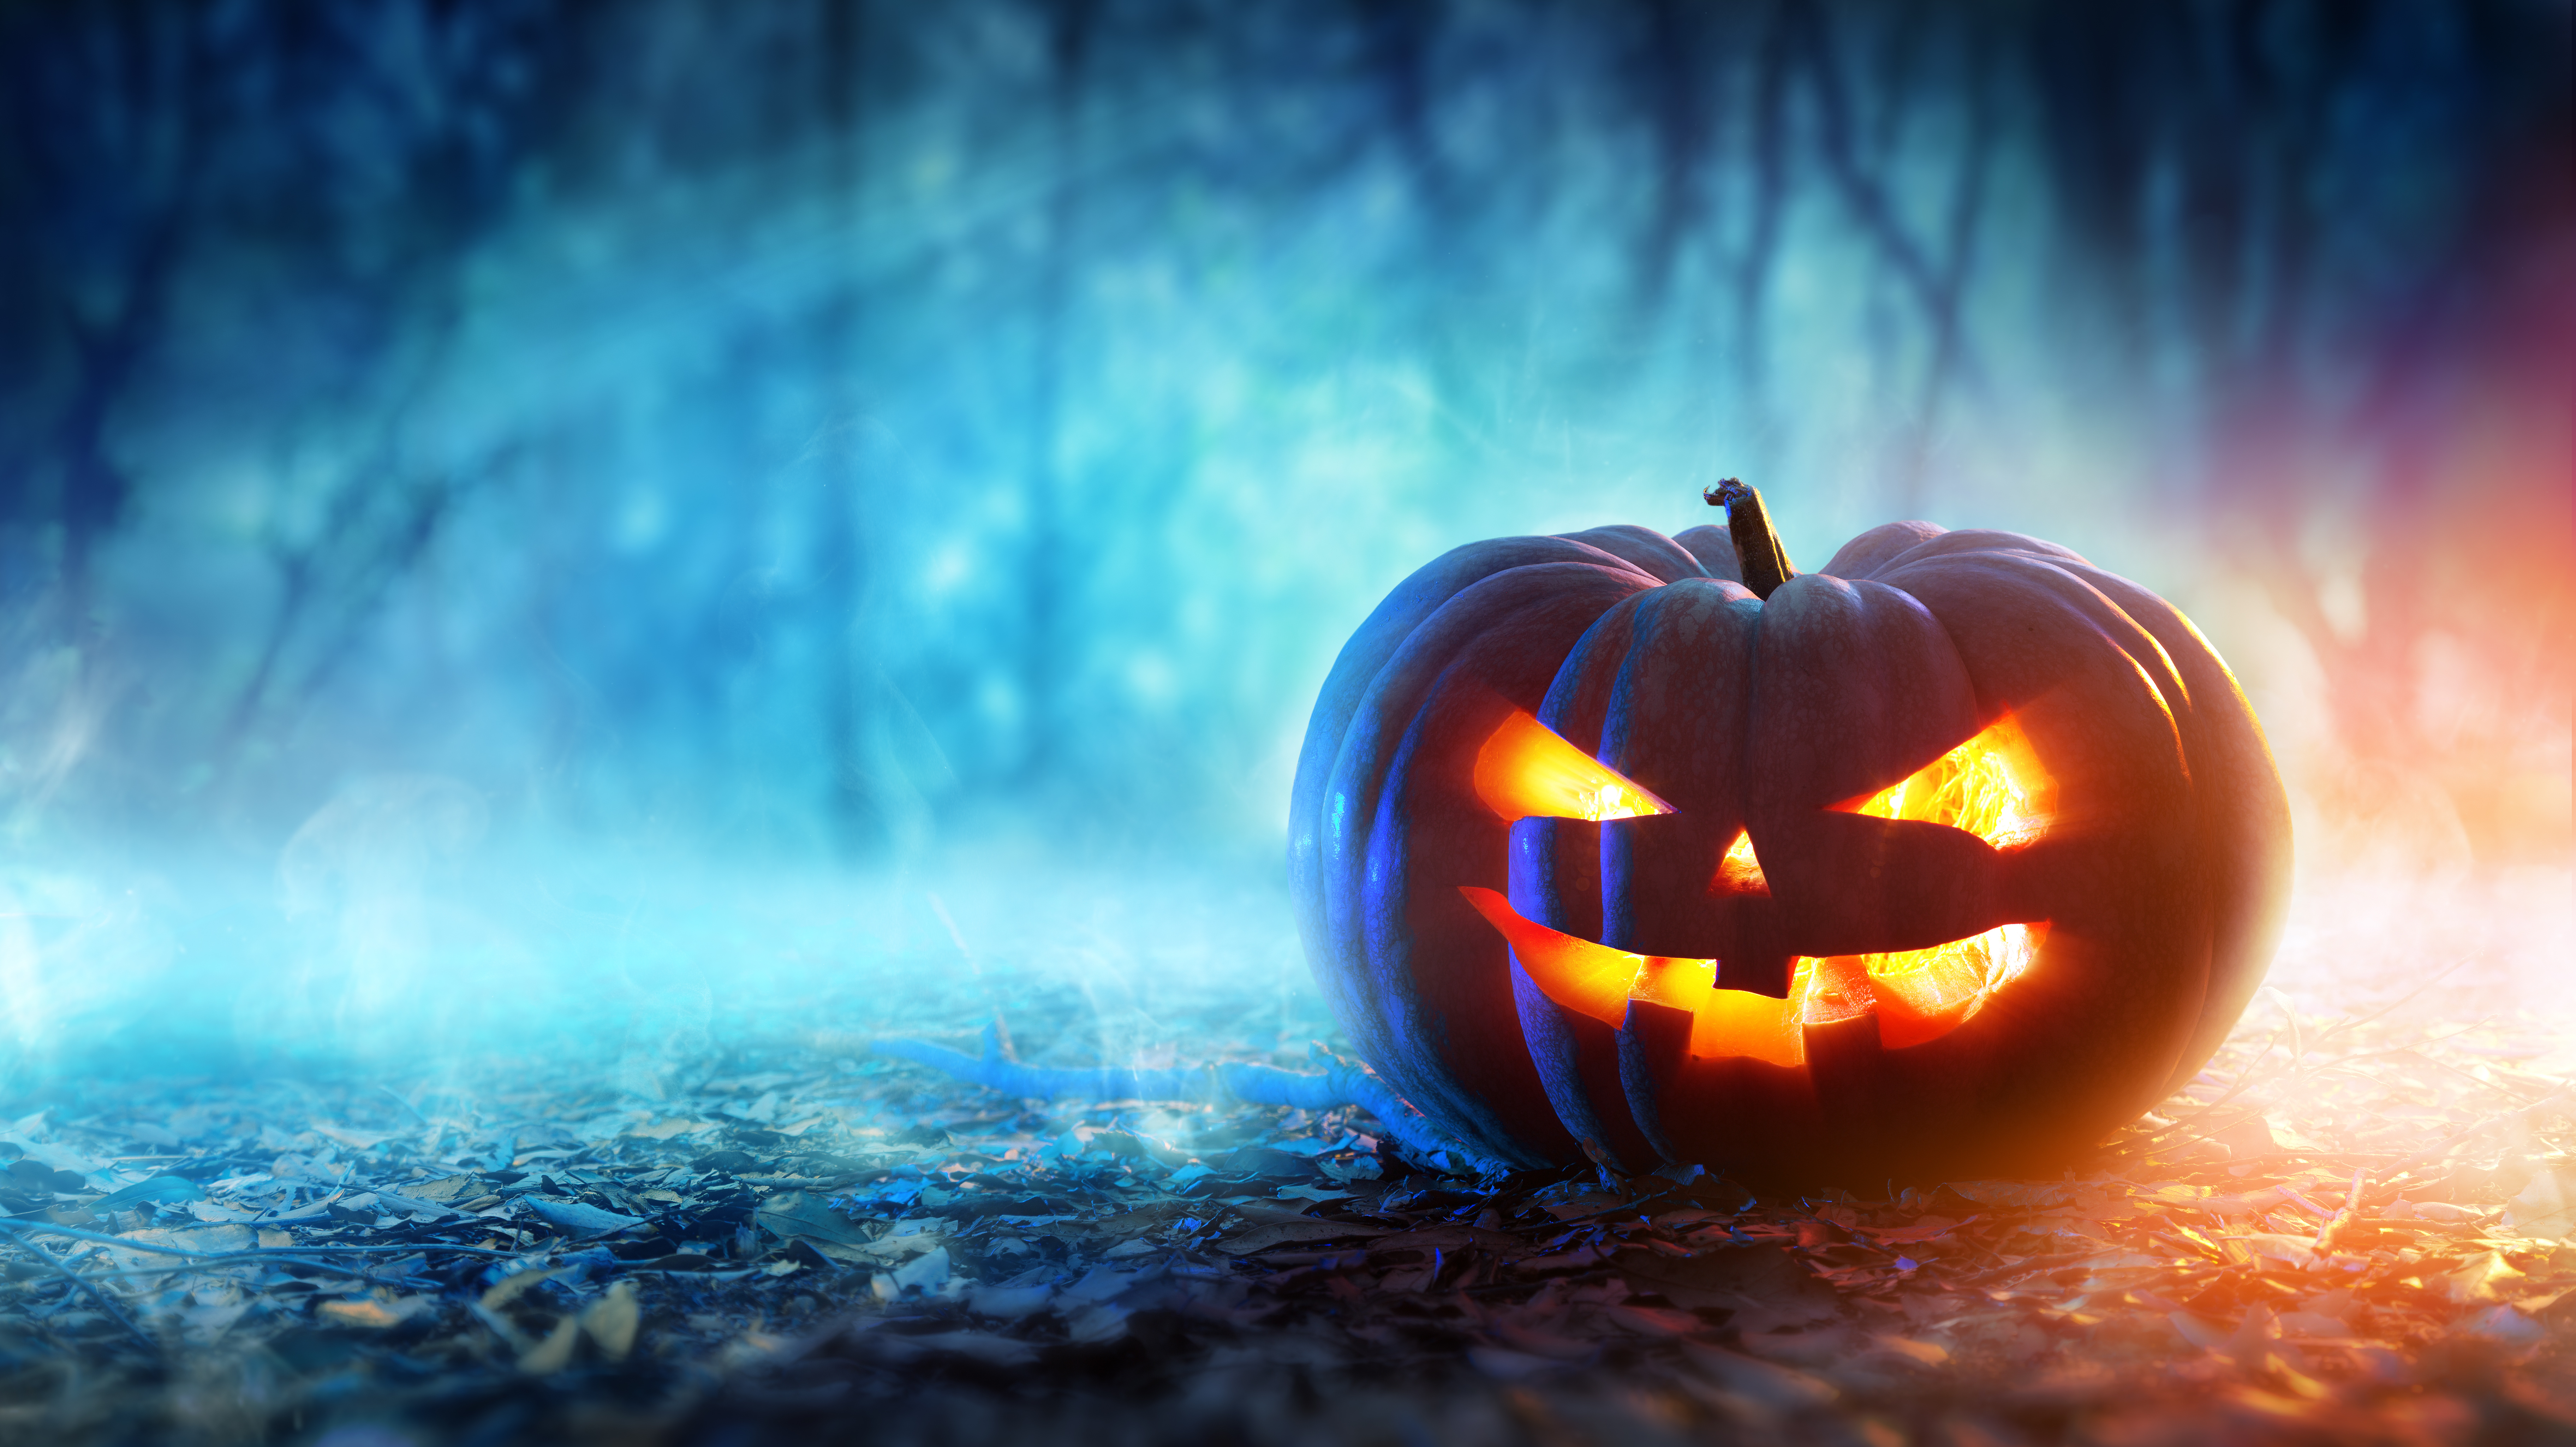 4k Ultra HD Halloween Wallpaper Background Image